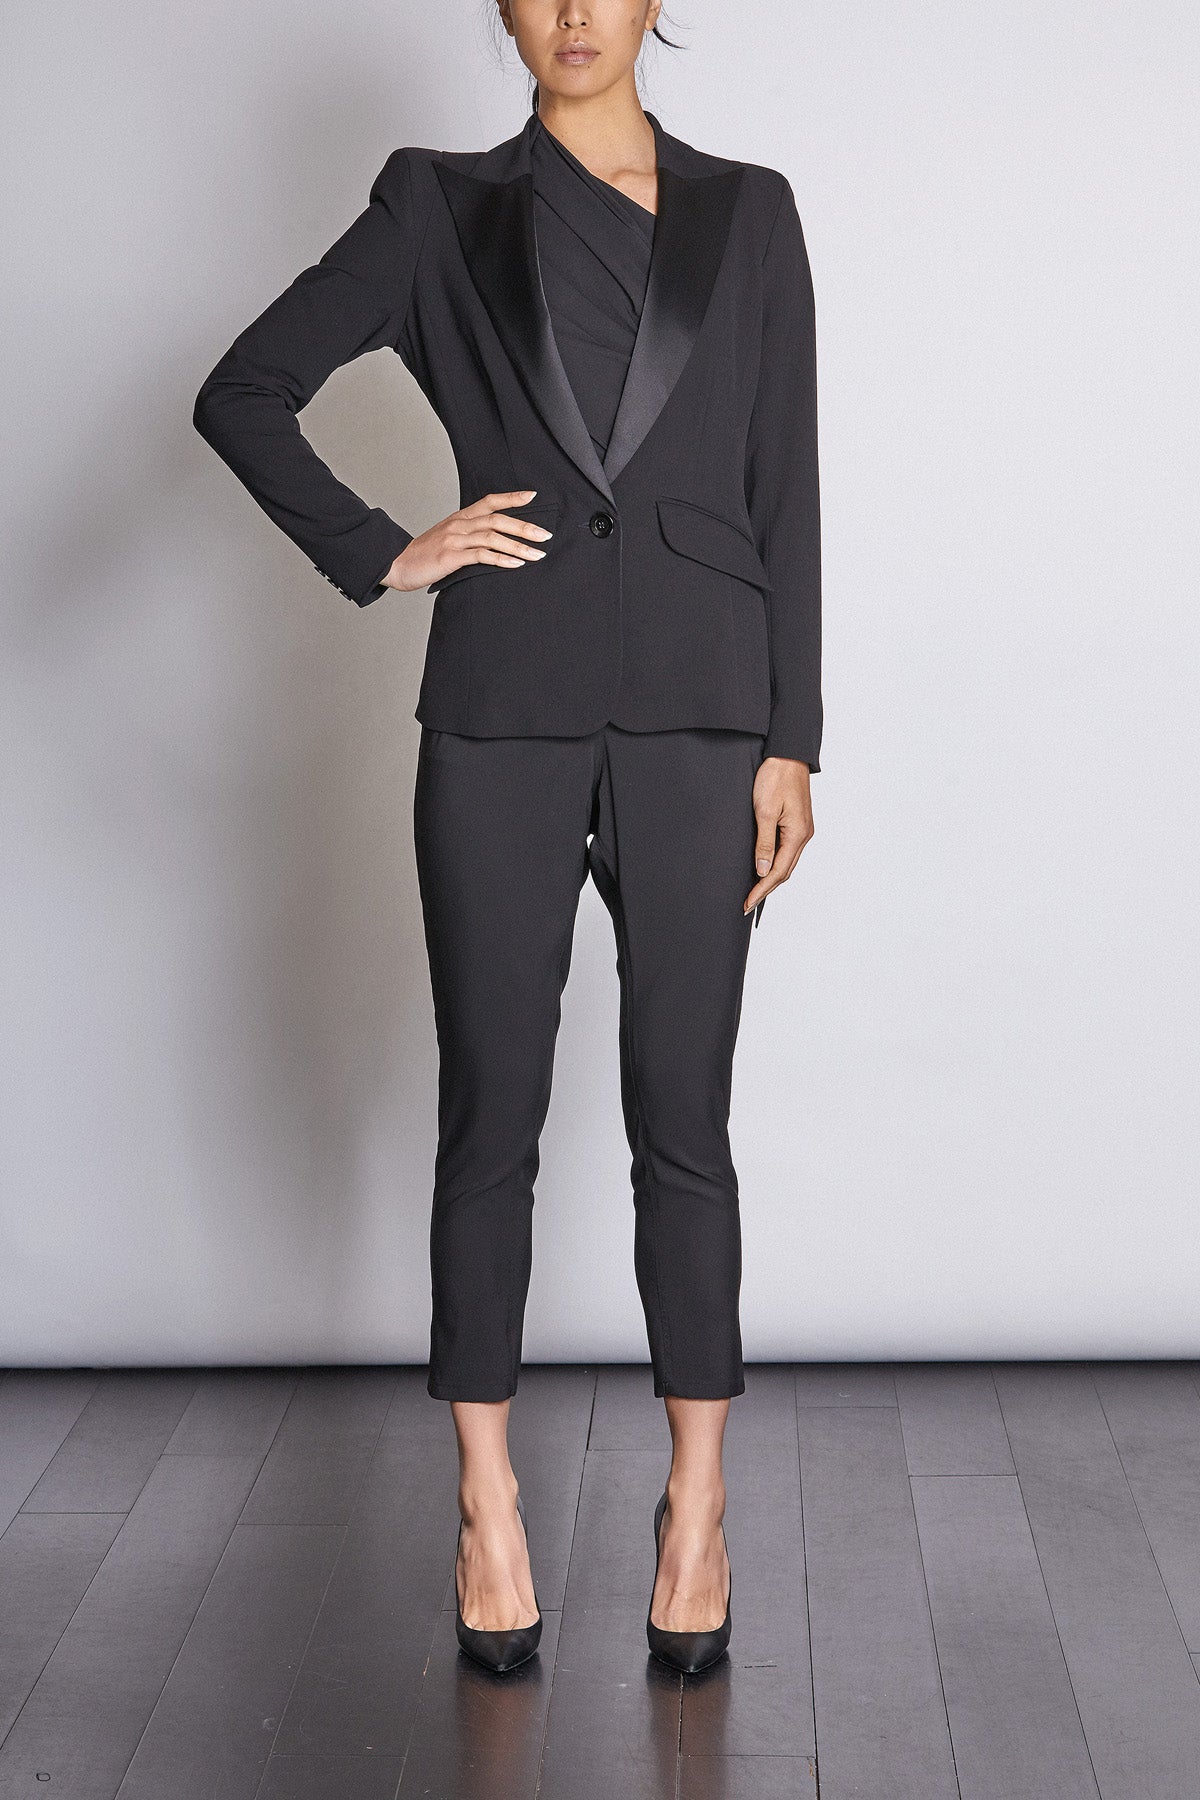 Signature High Shoulder Tuxedo 1.01 - Black - BEST SELLER + NEW ARRIVAL